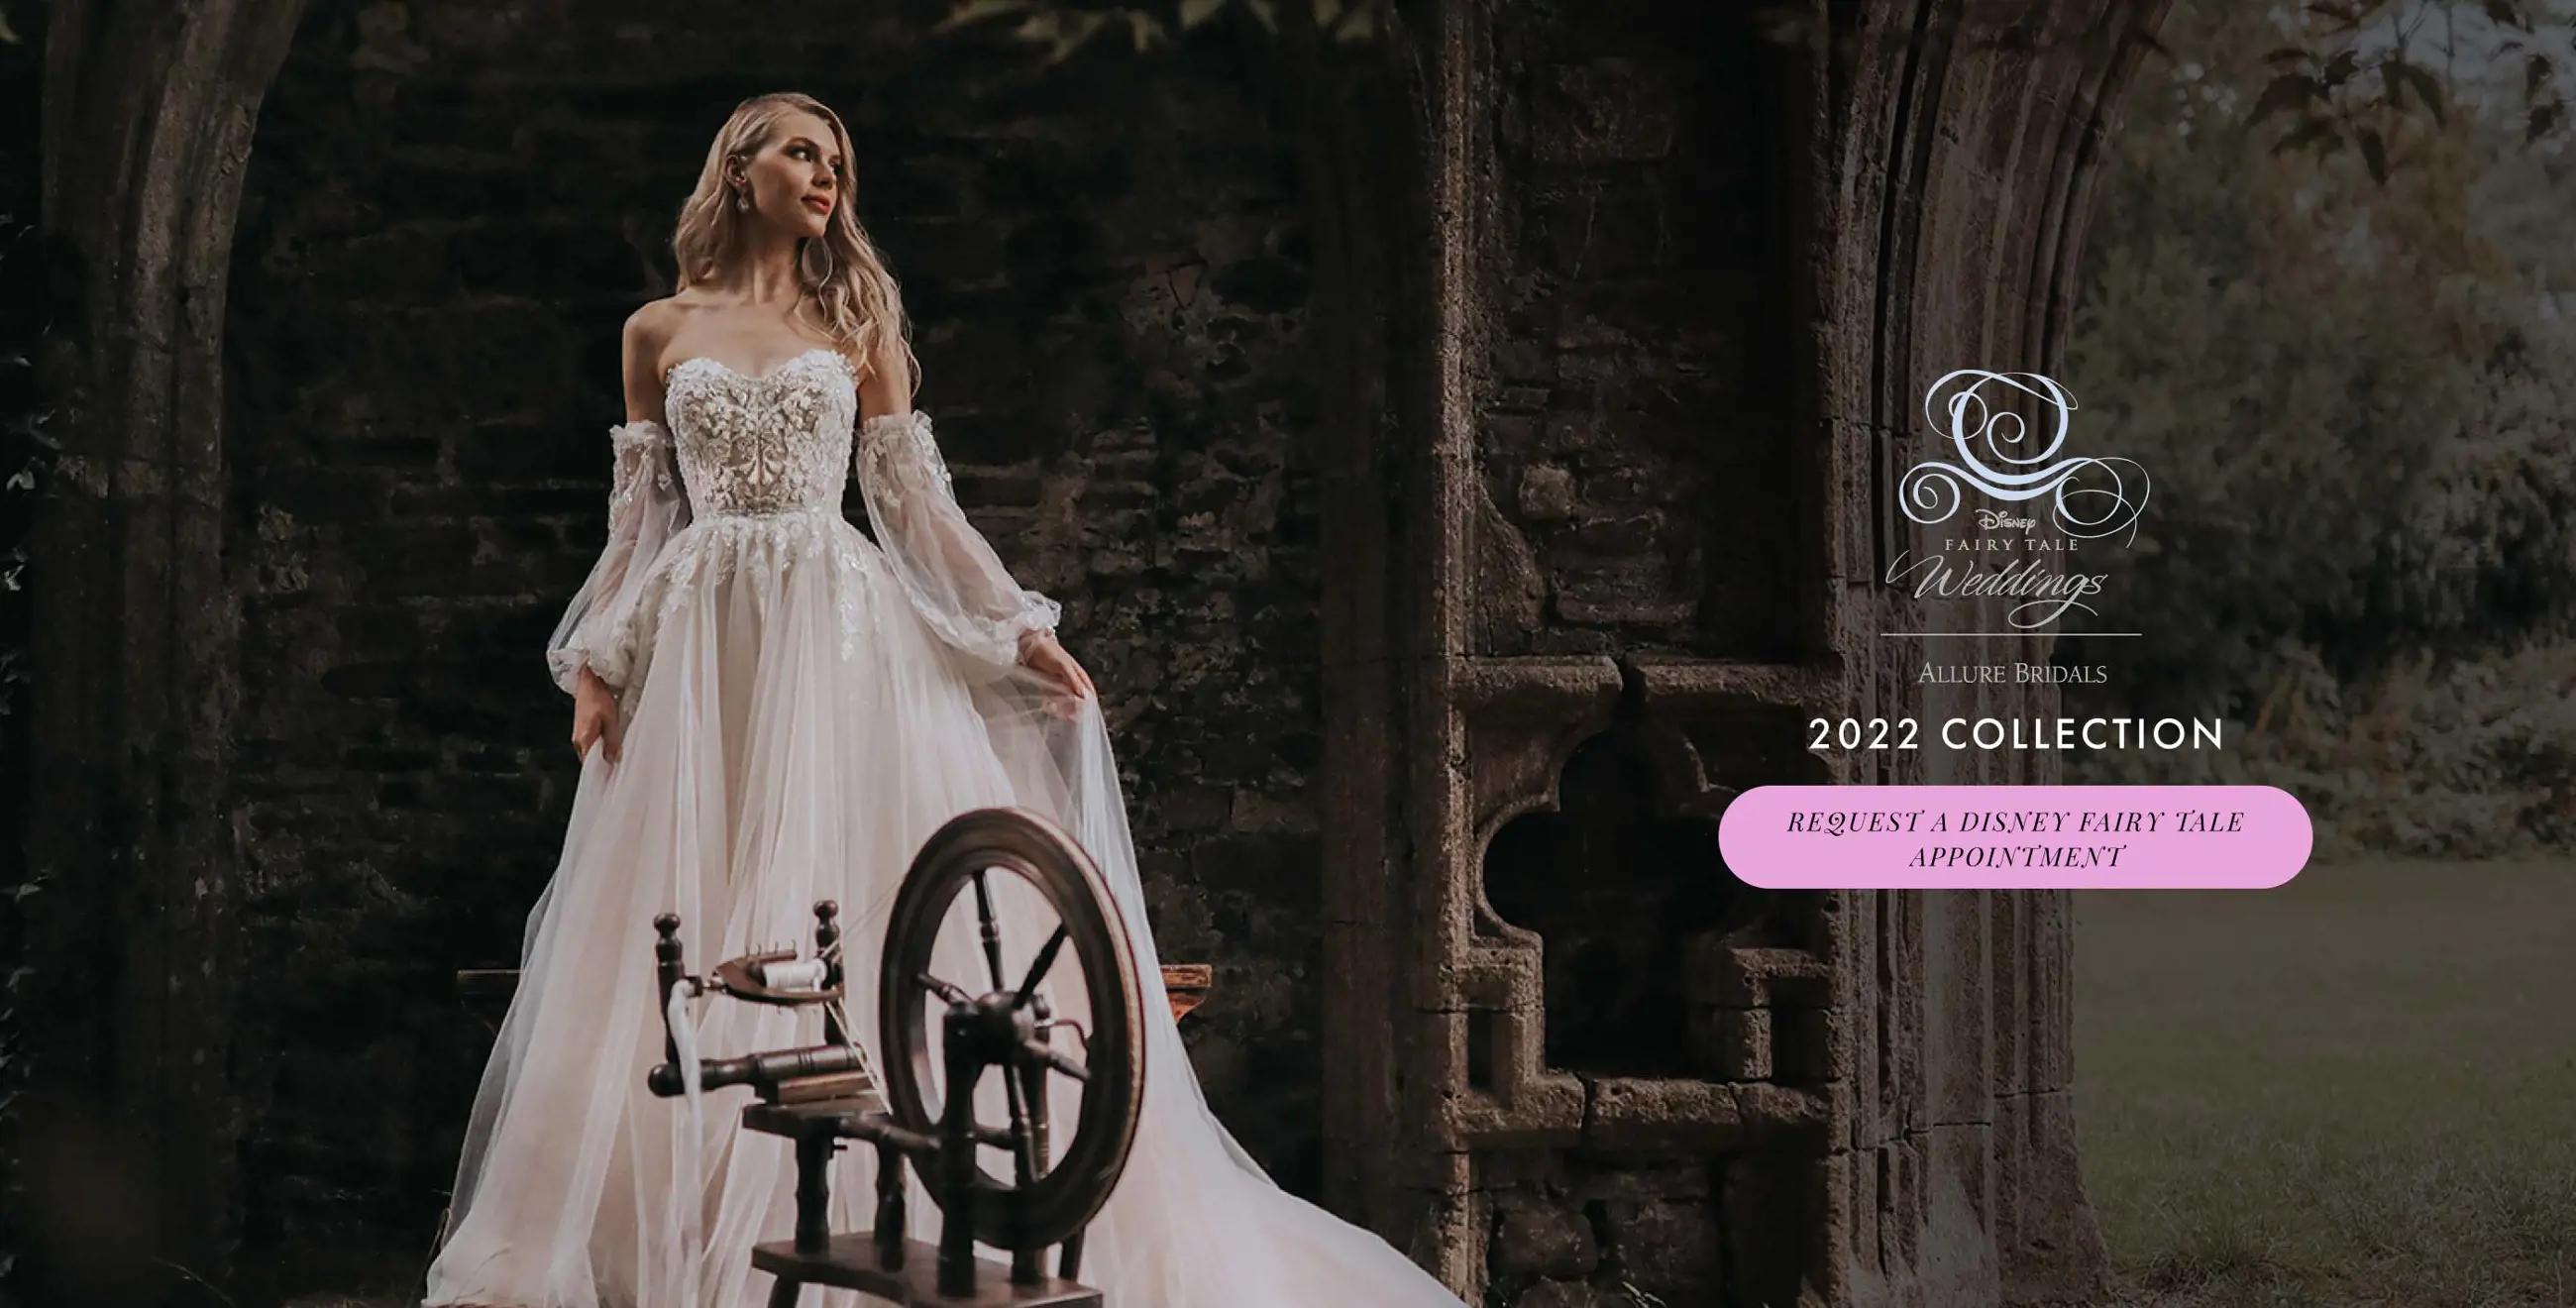 Disney Fairytale Wedding gowns at Trudys Brides. Desktop image.